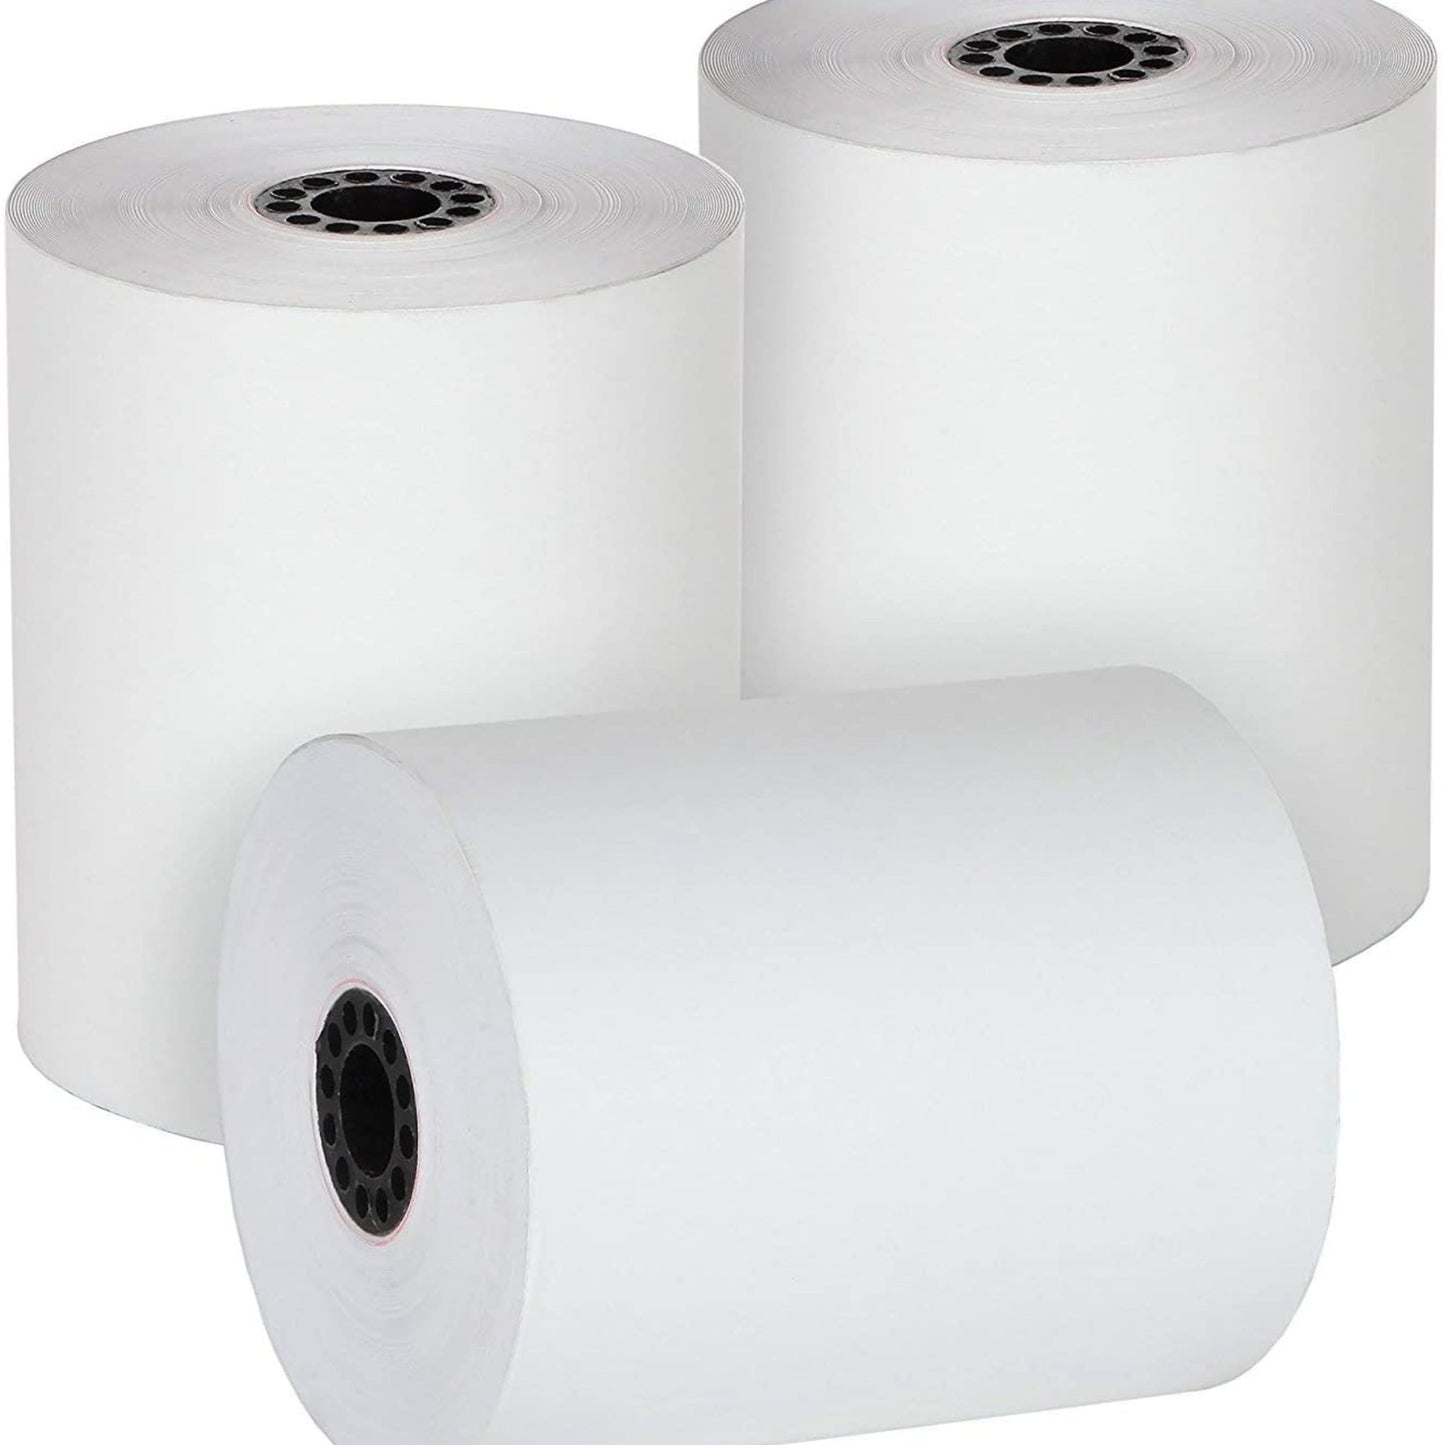 Thermal Paper Roll 3 1/8 x 180 - 50 Rolls